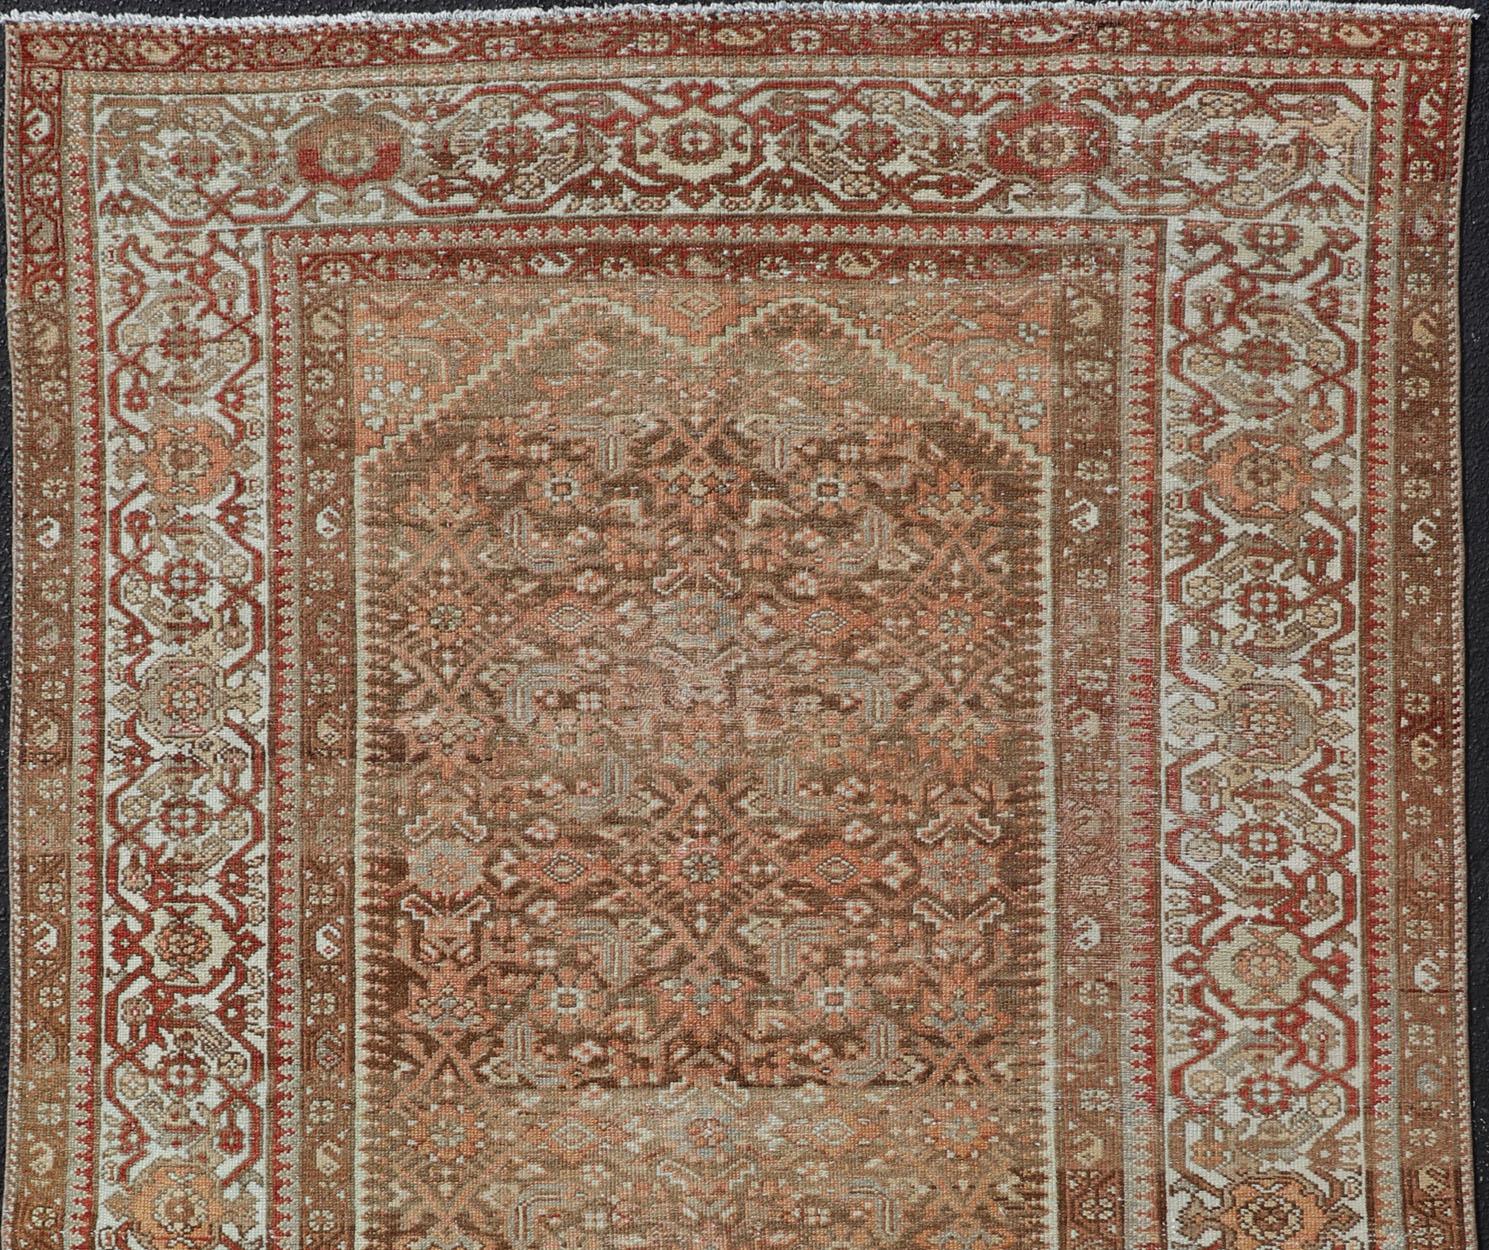 Geometric design antique hamadan rug in taupe and light tan color tones, antique persian hand knotted earthy tone. Keivan Woven Arts / rug EMB-9567-P13078, origin / type: Iran / Hamedan, circa 1920


Measures: 5'7 x 9'7.